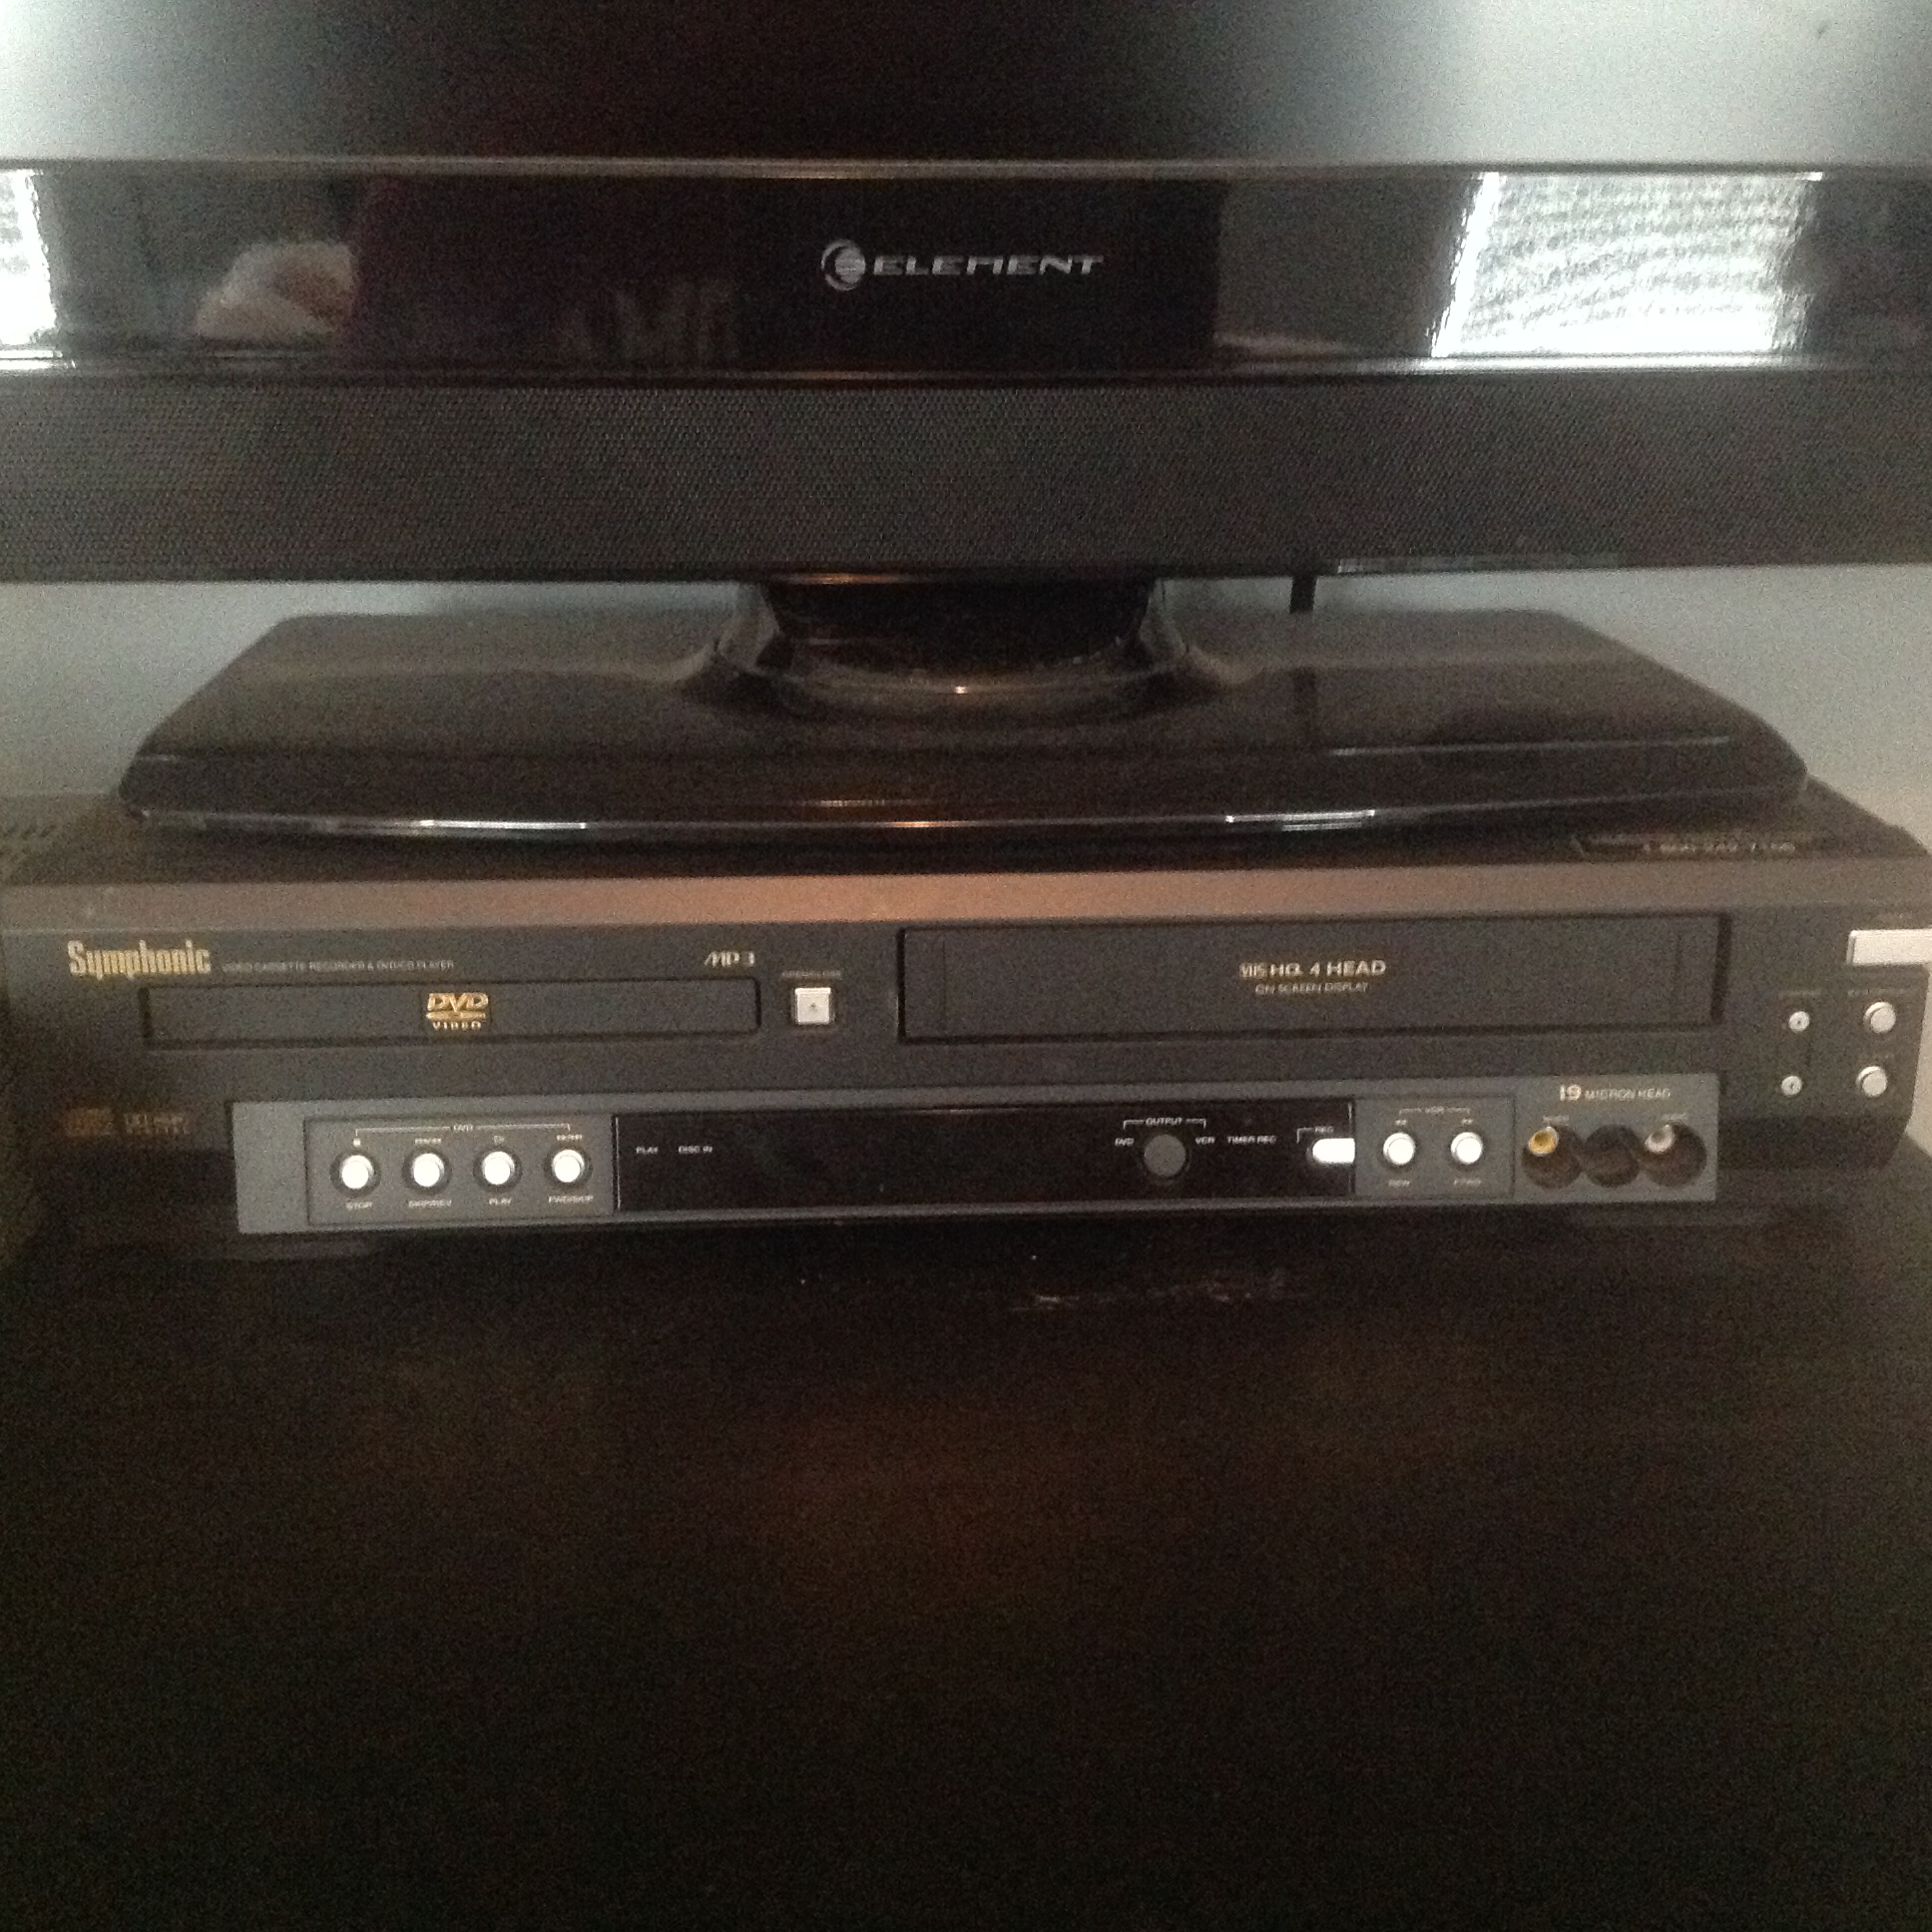 Symphonic DVD/VCR Combo Player